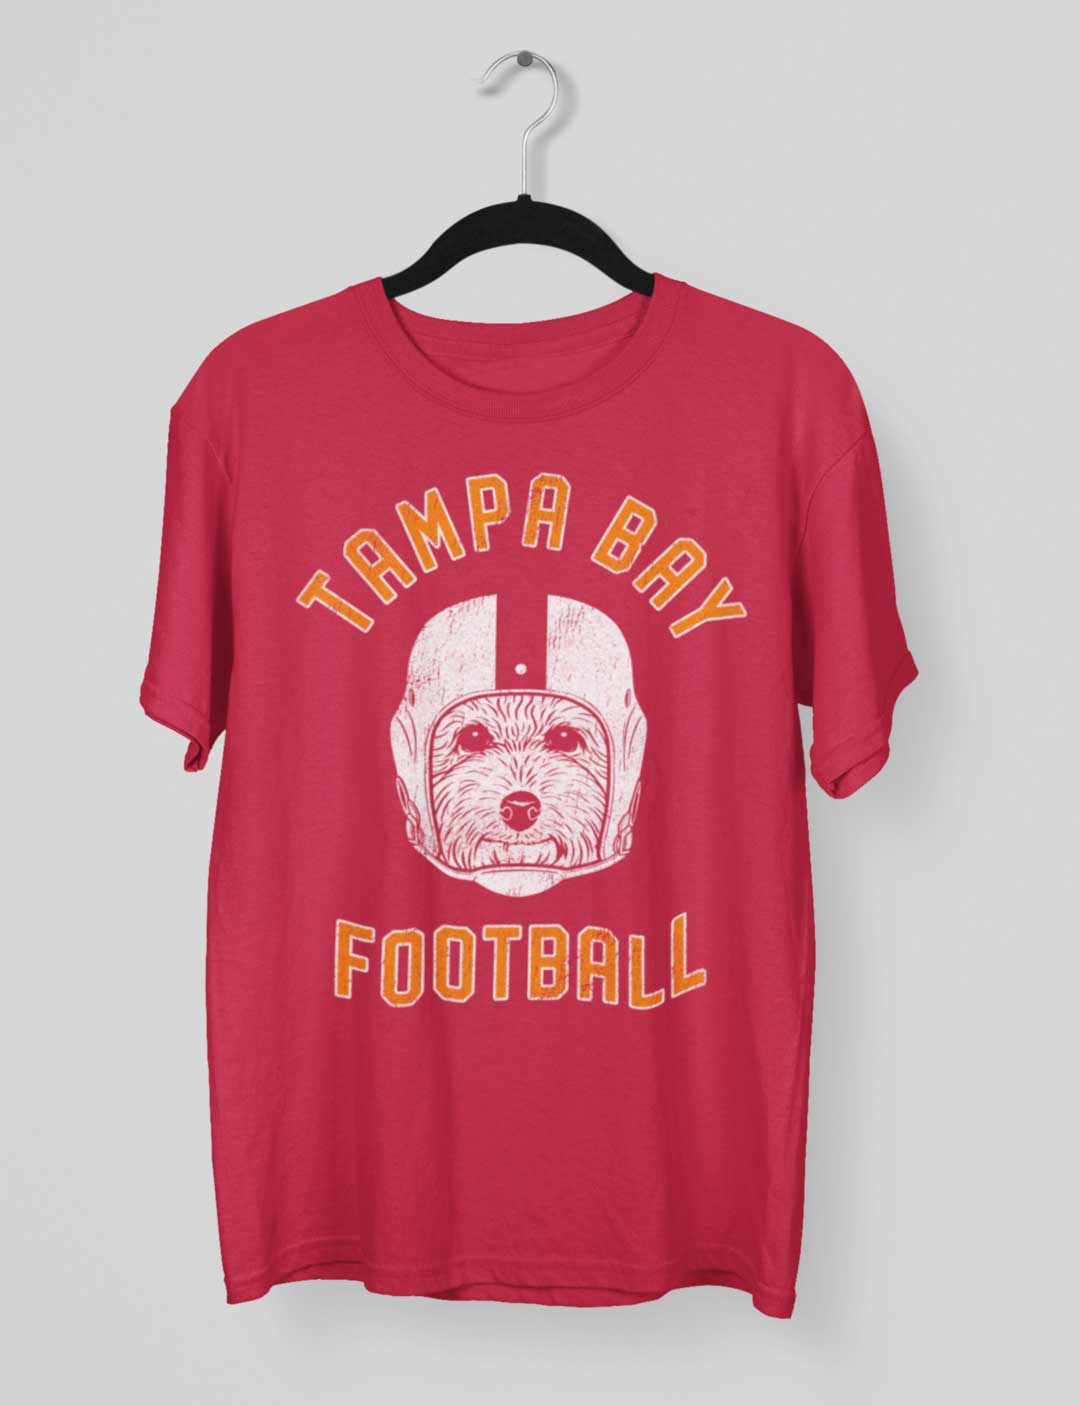 Tampa Bay Football Poodle T-Shirt